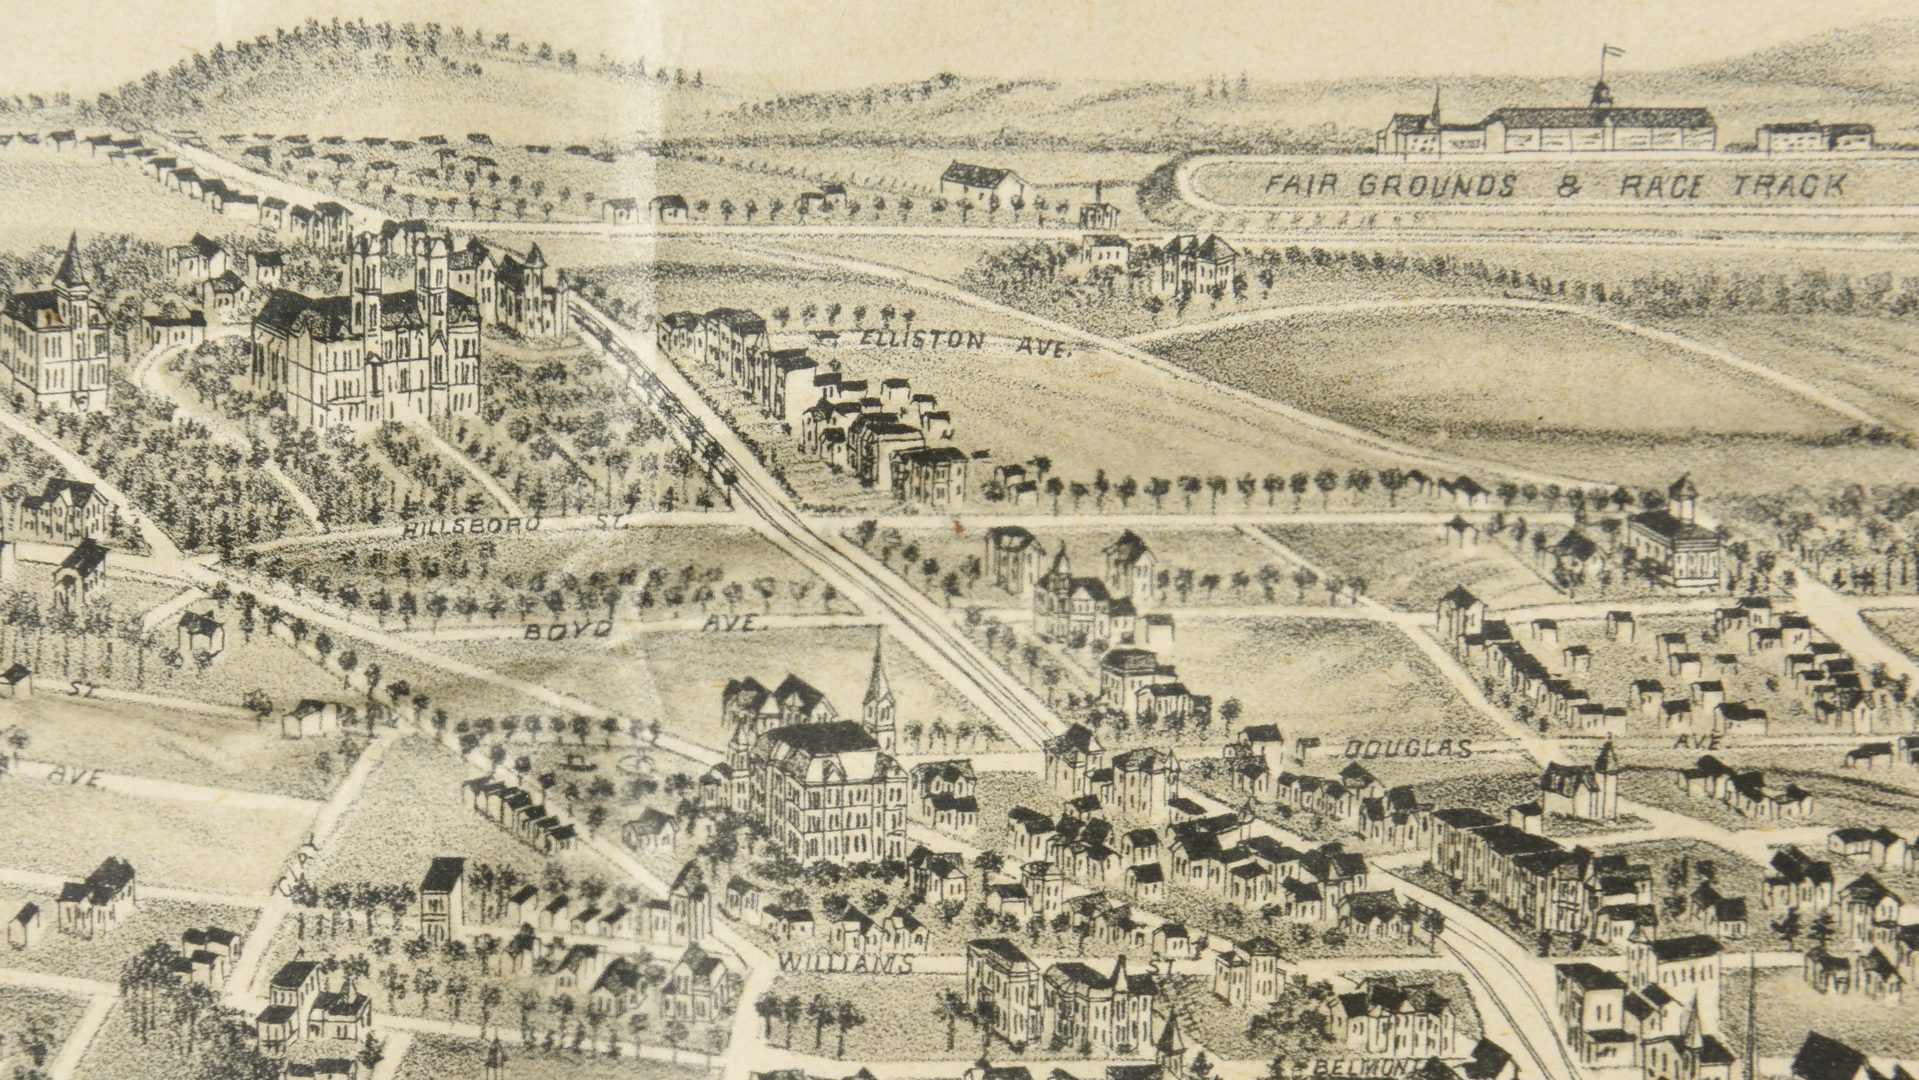 Lot 259: 1888 Birdseye View Nashville Map plus 2 Streetcar Maps